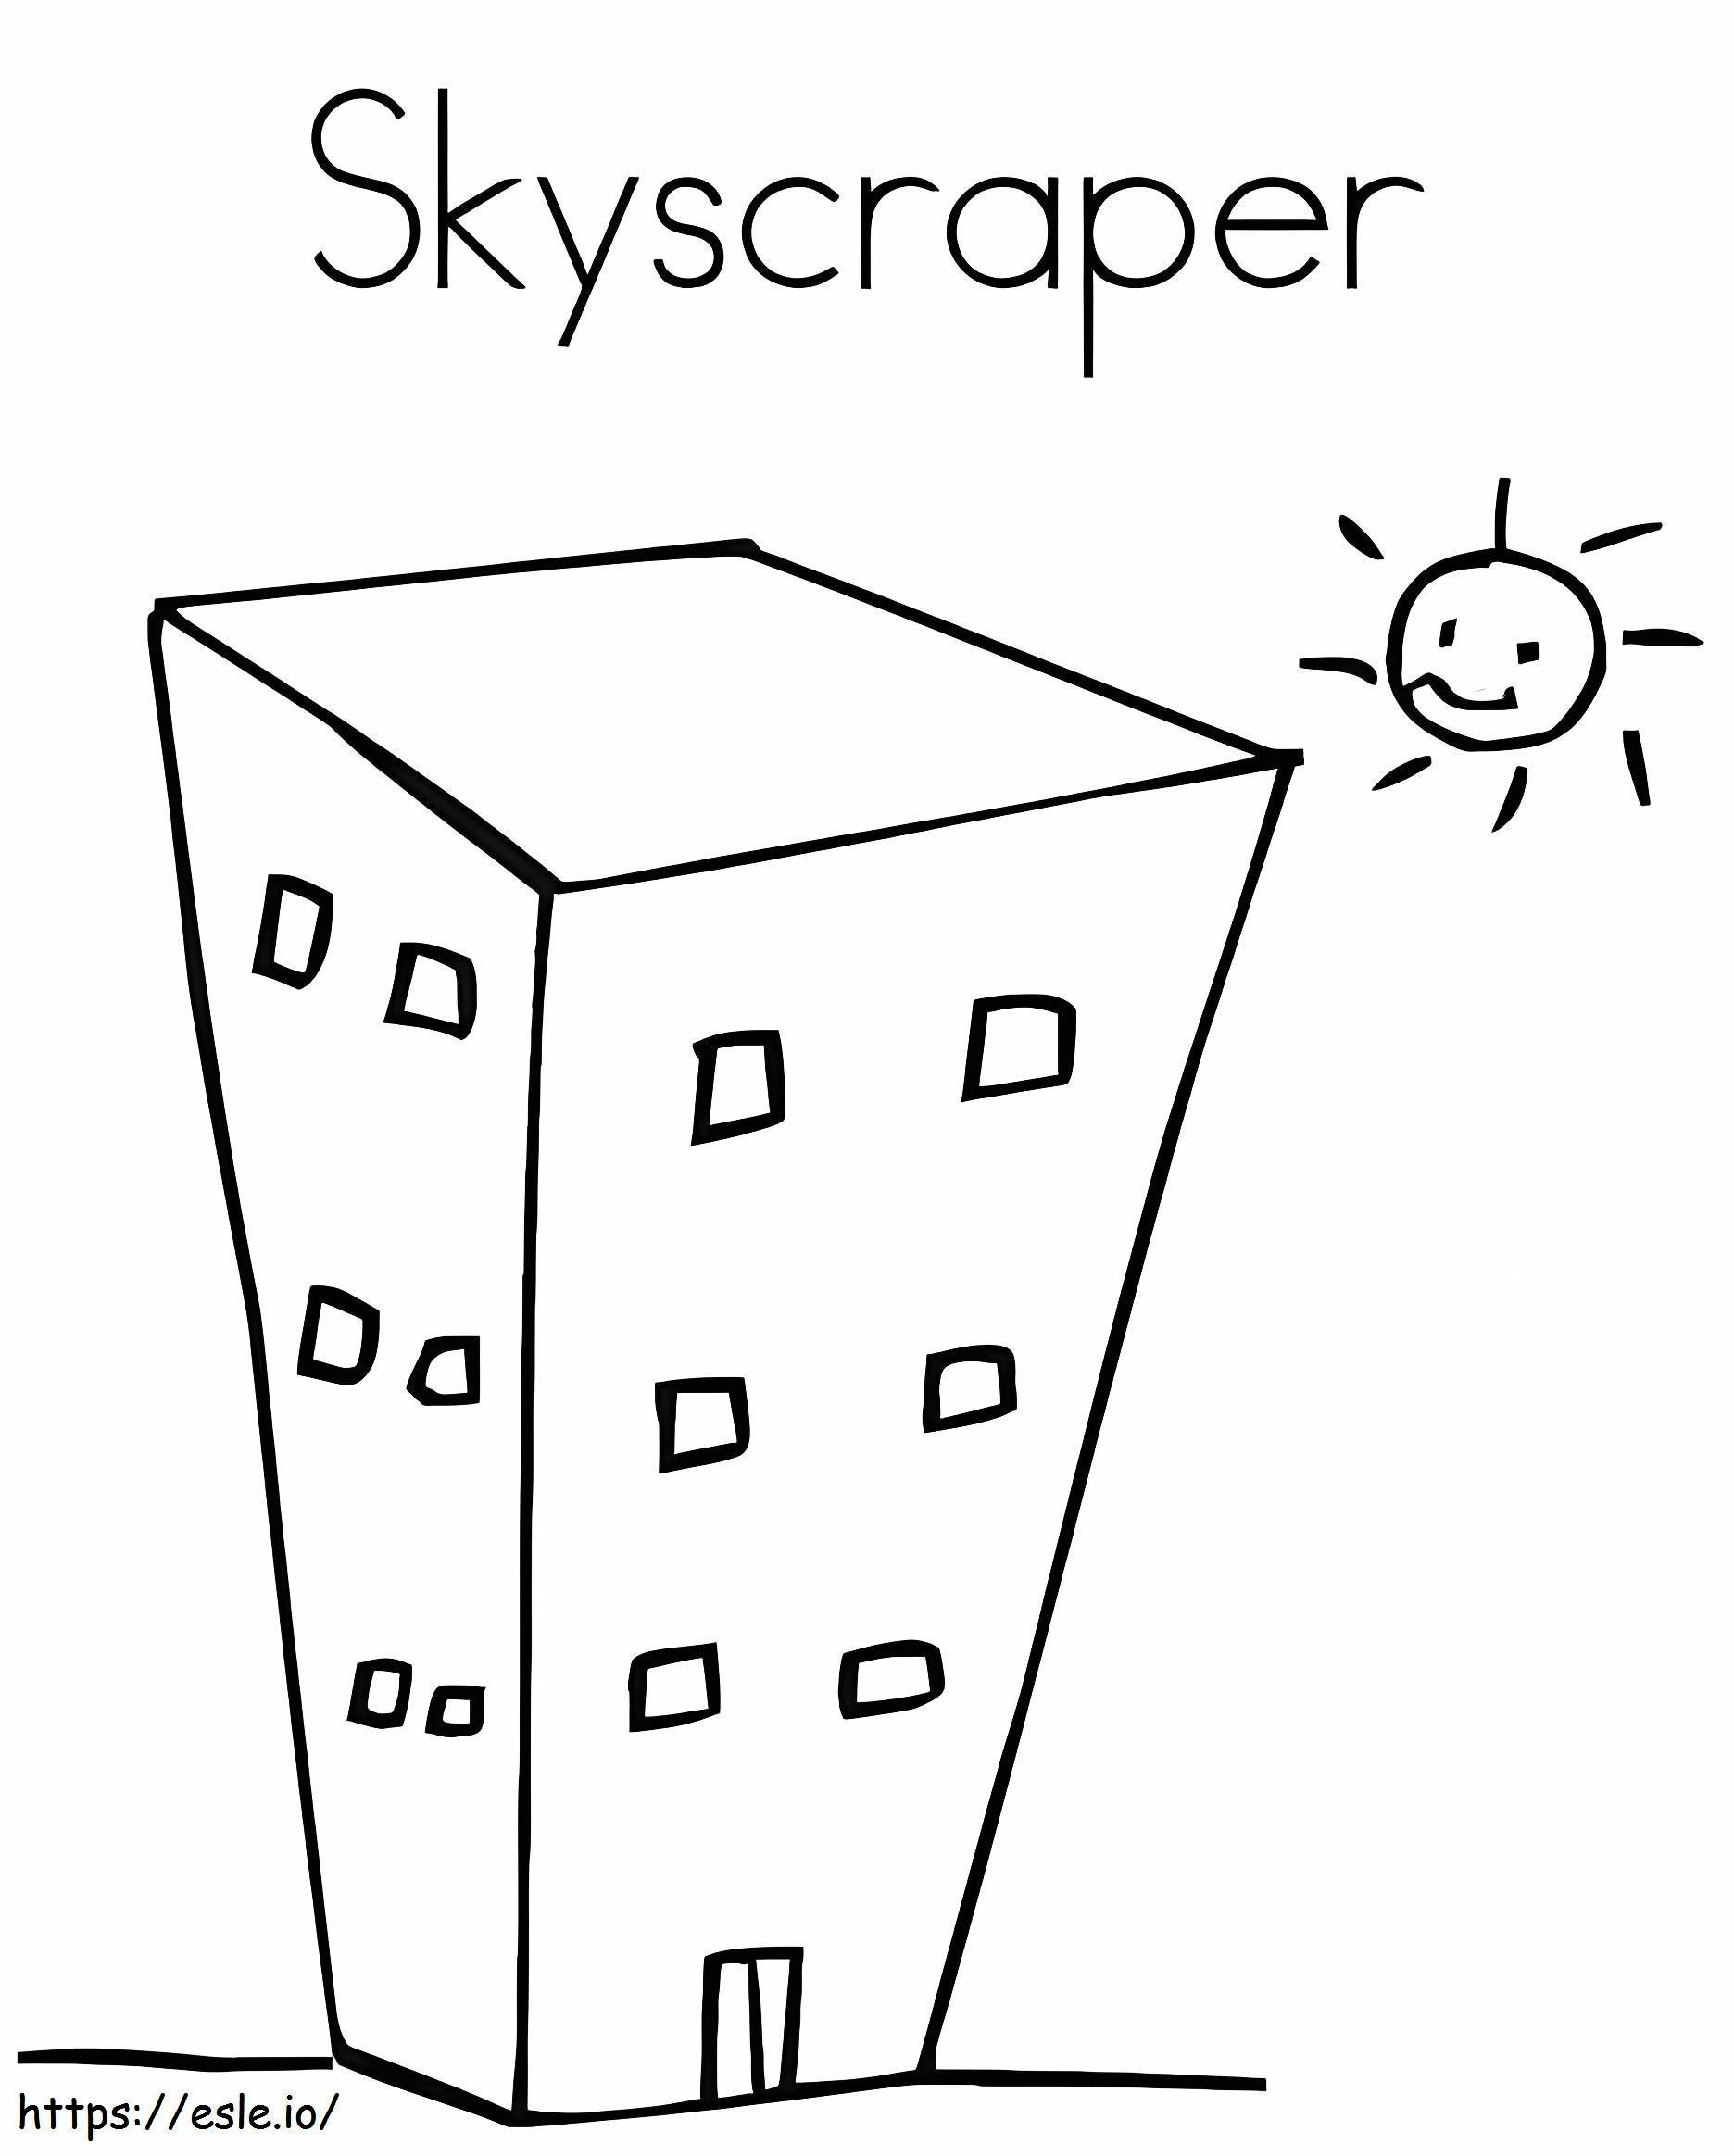 Skyscraper Free Printable coloring page